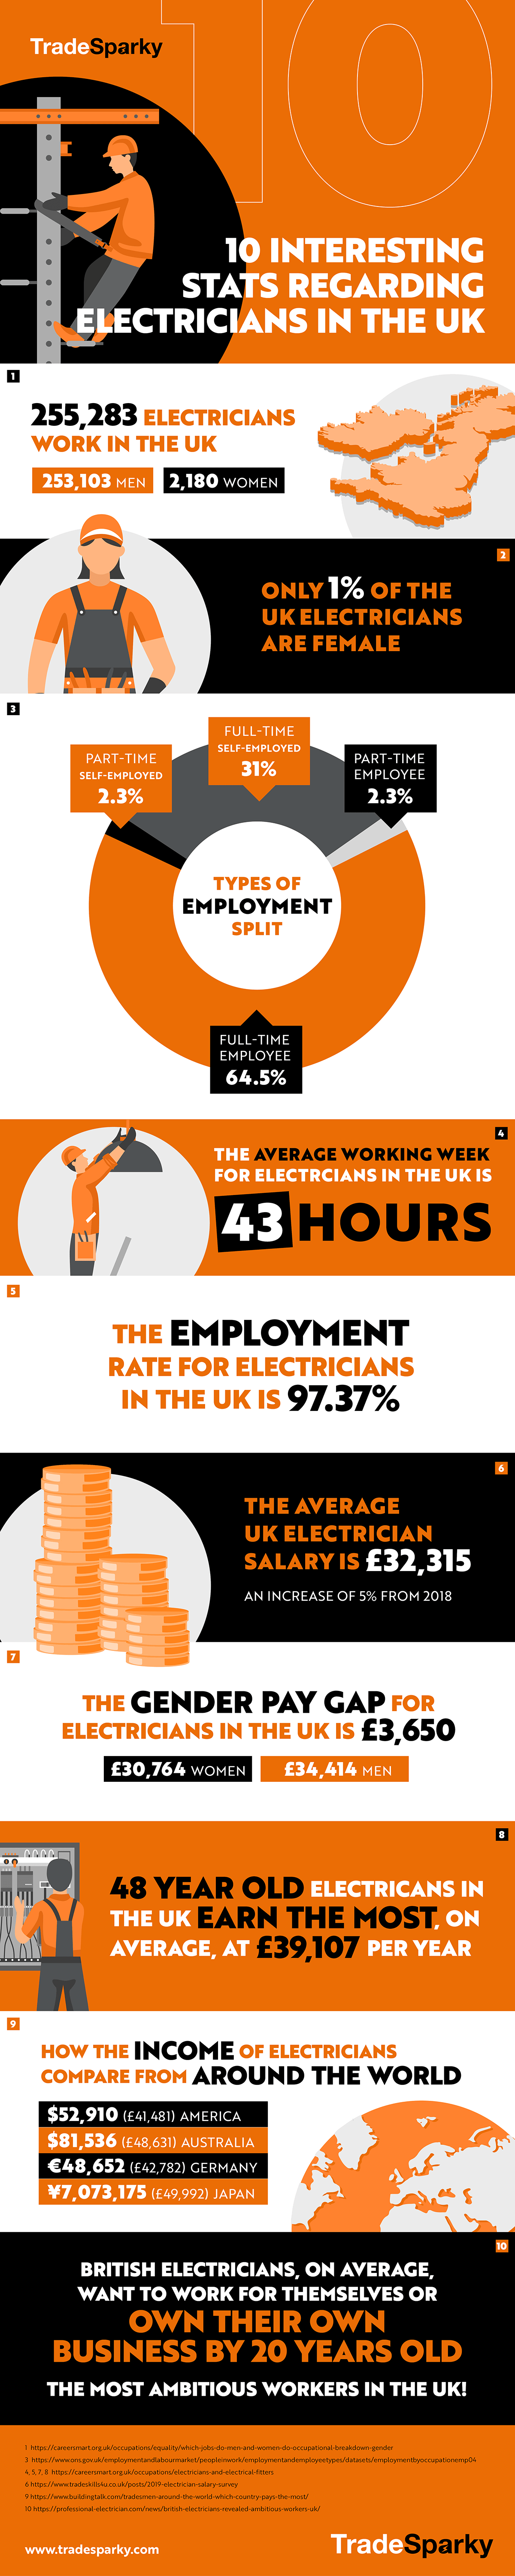 Interesting Stats Regarding Electricians in the UK